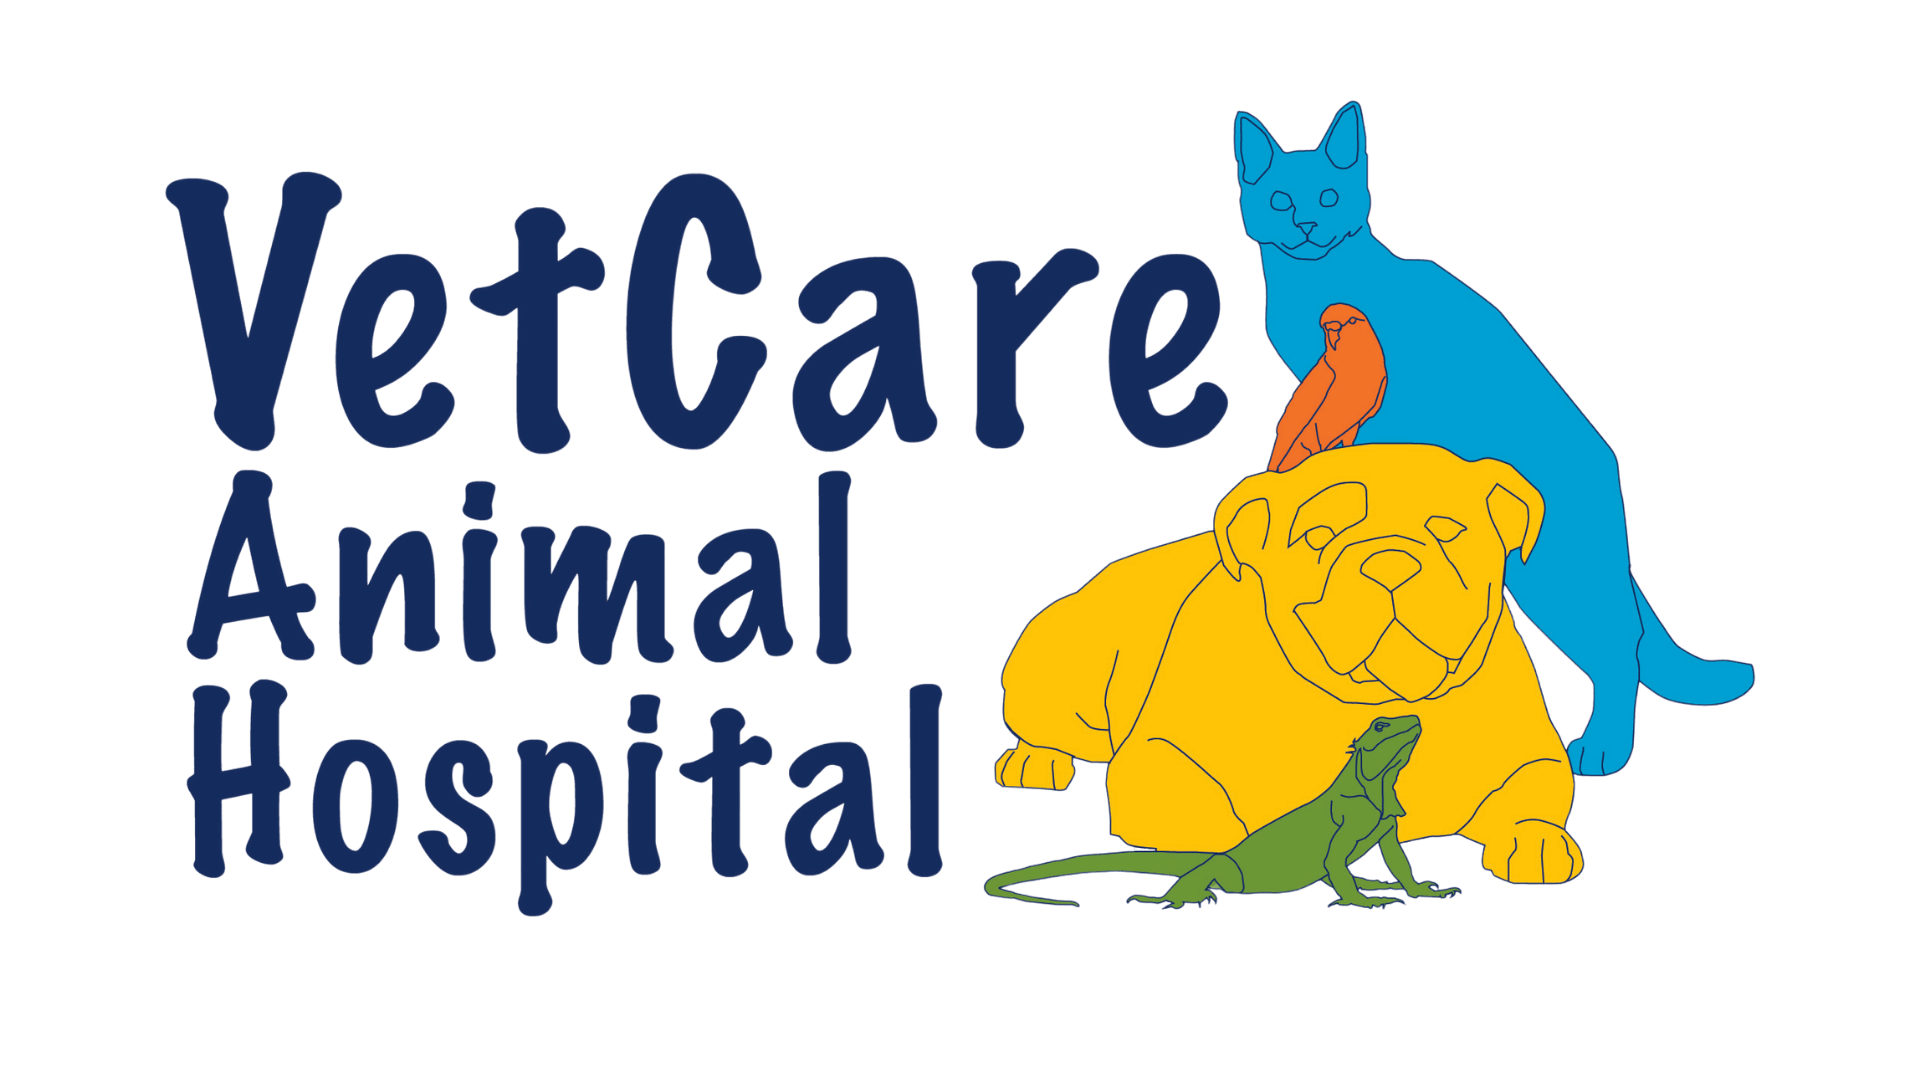 VetCare Animal Hospital Logo